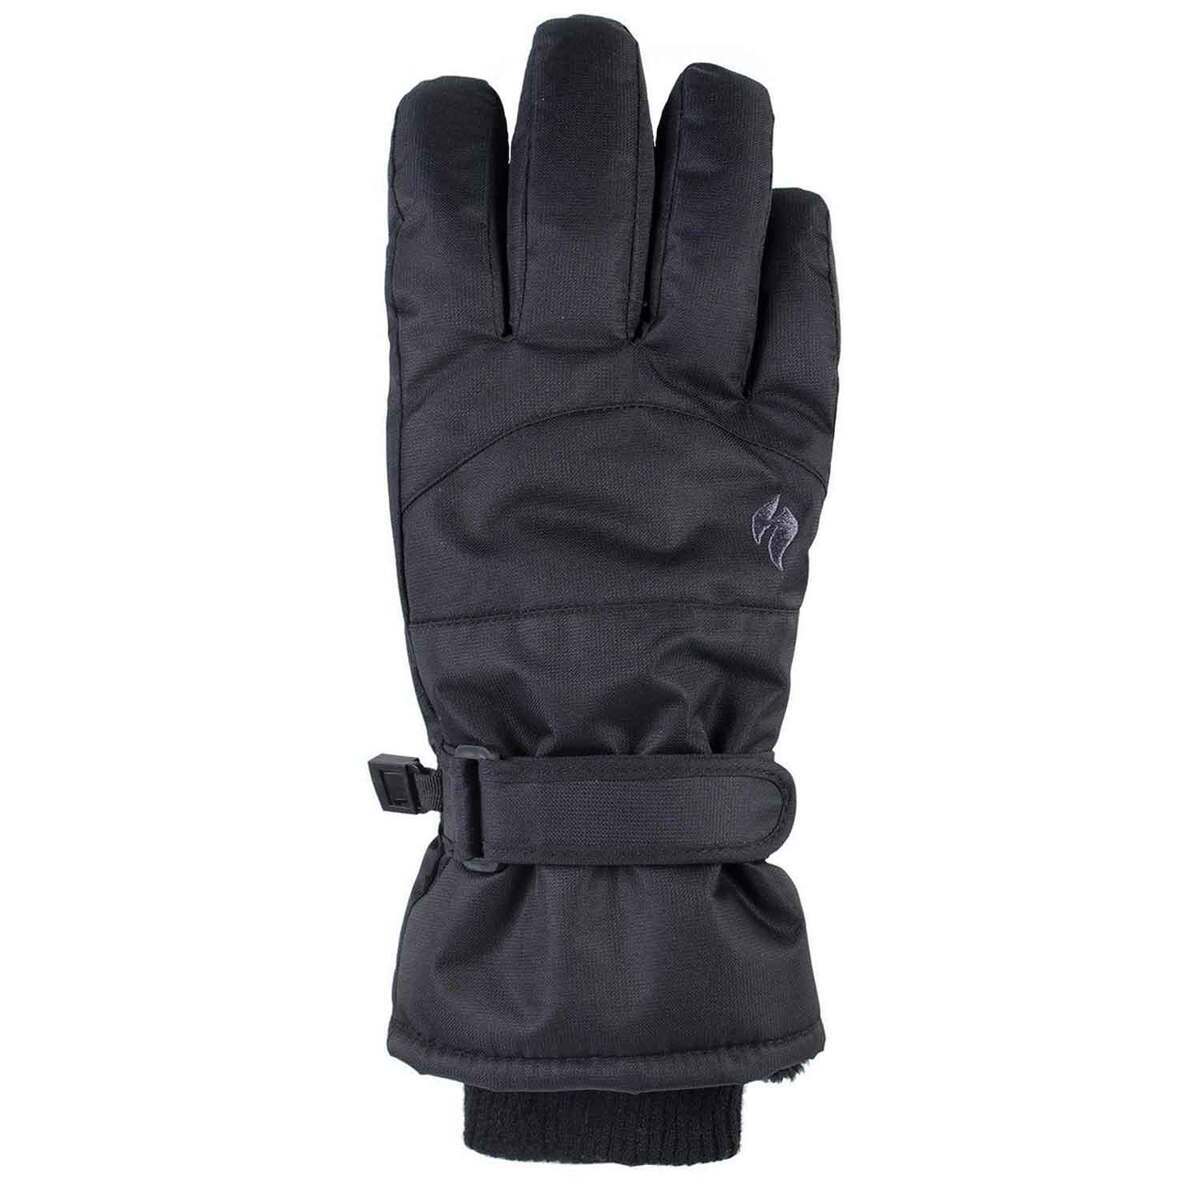 https://www.sportsmans.com/medias/heat-holders-mens-high-performance-winter-gloves-black-ml-1625853-1.jpg?context=bWFzdGVyfGltYWdlc3w2NTIxOHxpbWFnZS9qcGVnfGg5NS9oYjIvMTE4NTQ5NDY1NjYxNzQvMTIwMC1jb252ZXJzaW9uRm9ybWF0X2Jhc2UtY29udmVyc2lvbkZvcm1hdF9zbXctMTYyNTg1My0xLmpwZ3wxMzg2ZGMyODk5ZWVlMTI0Zjc1ODA5NjQ4N2QwNmZmZGQ0OTYzNzAyYzMzNzJiNDdhMTlkOTNjYWU0NTAxZTA2